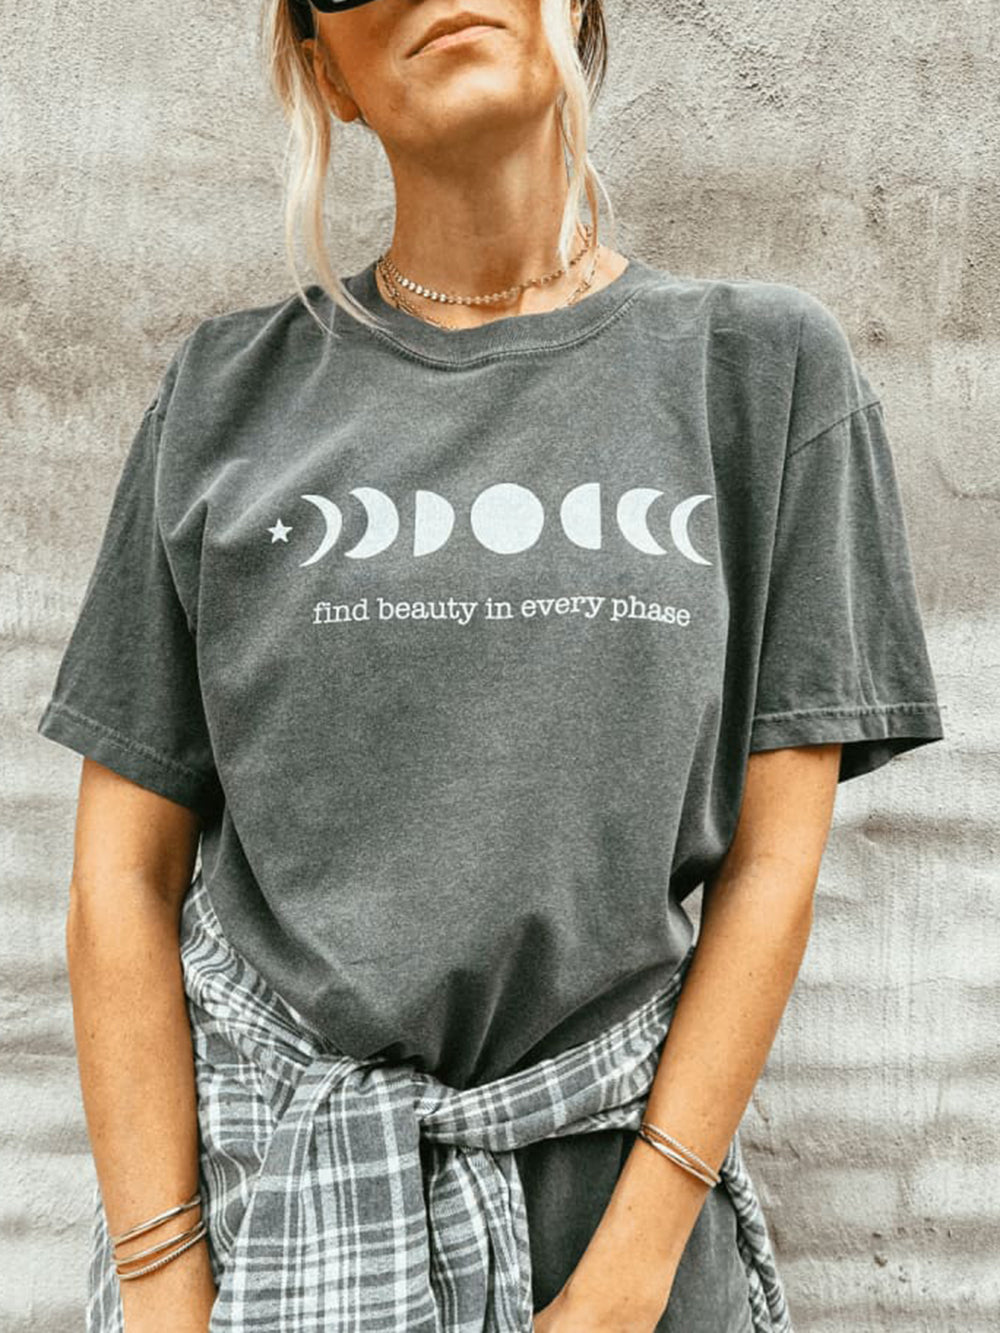 Camiseta gráfica da fase da lua